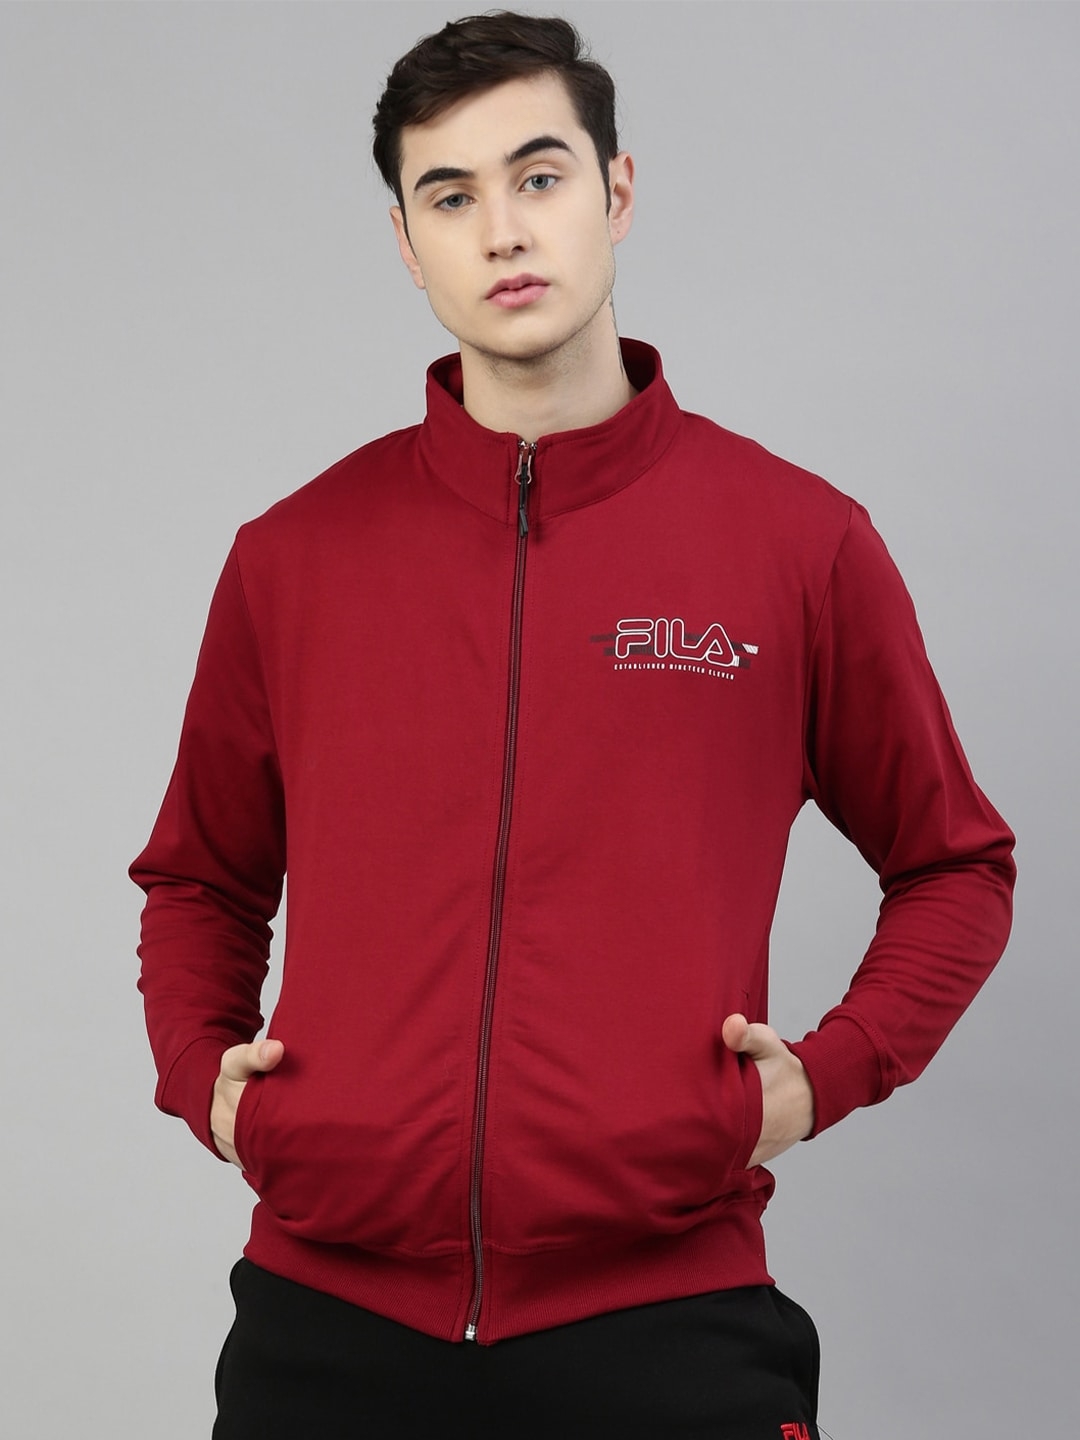 FILA | Men's Red Cotton Activewear Jackets